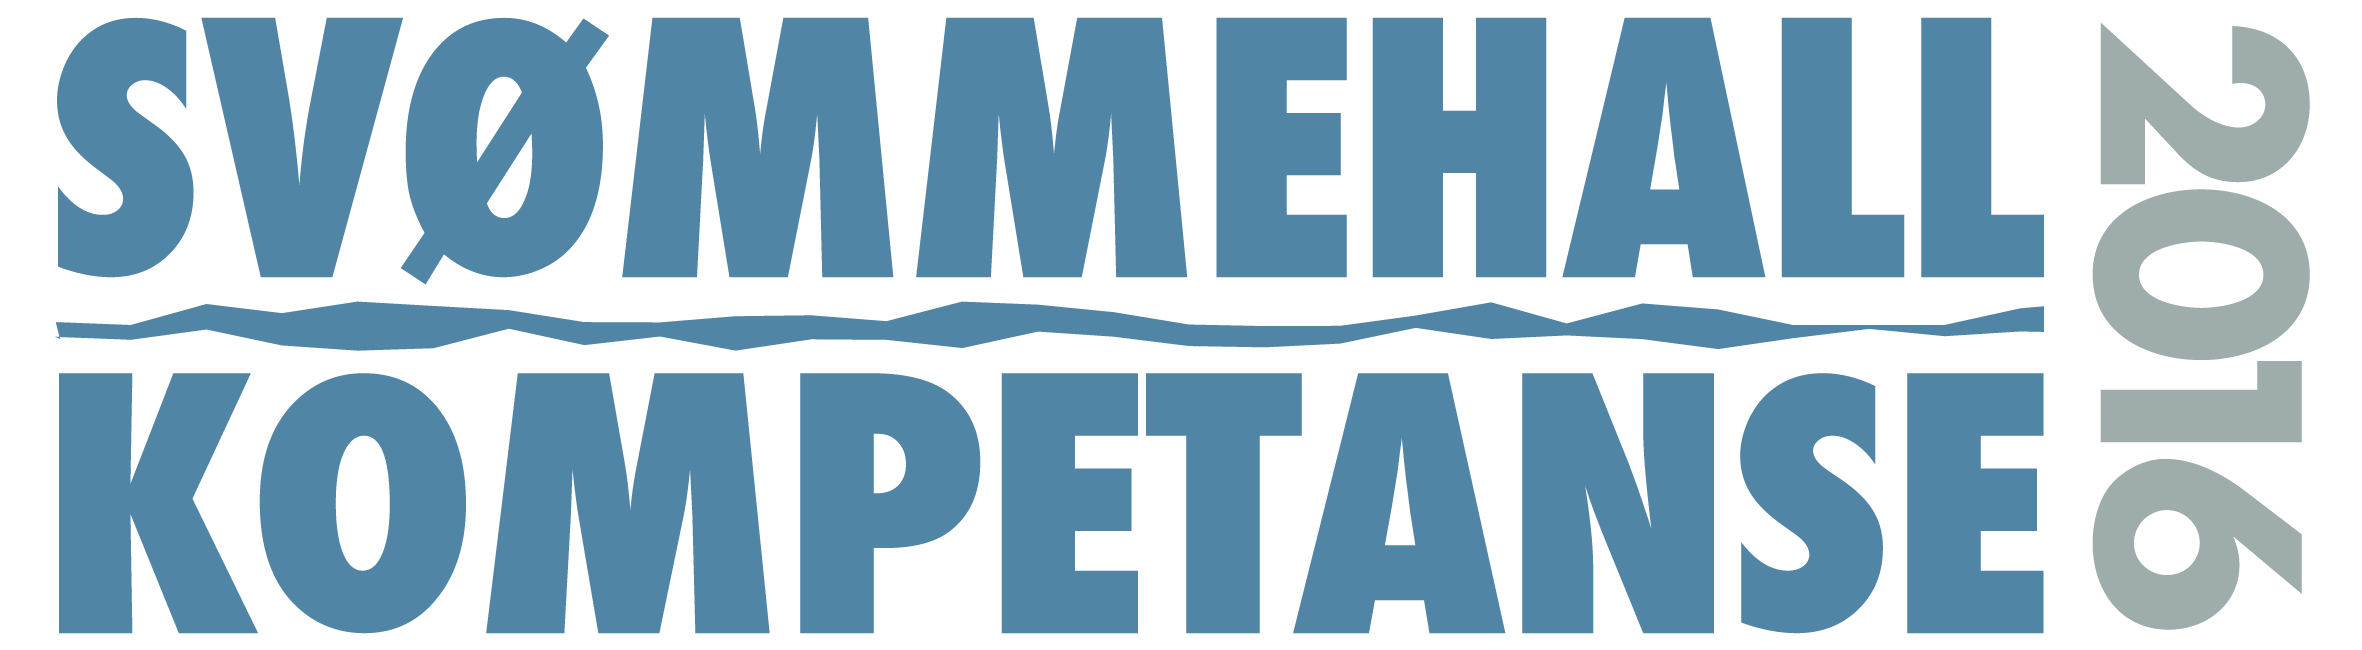 svømmehallkompetanse 2016. logo.